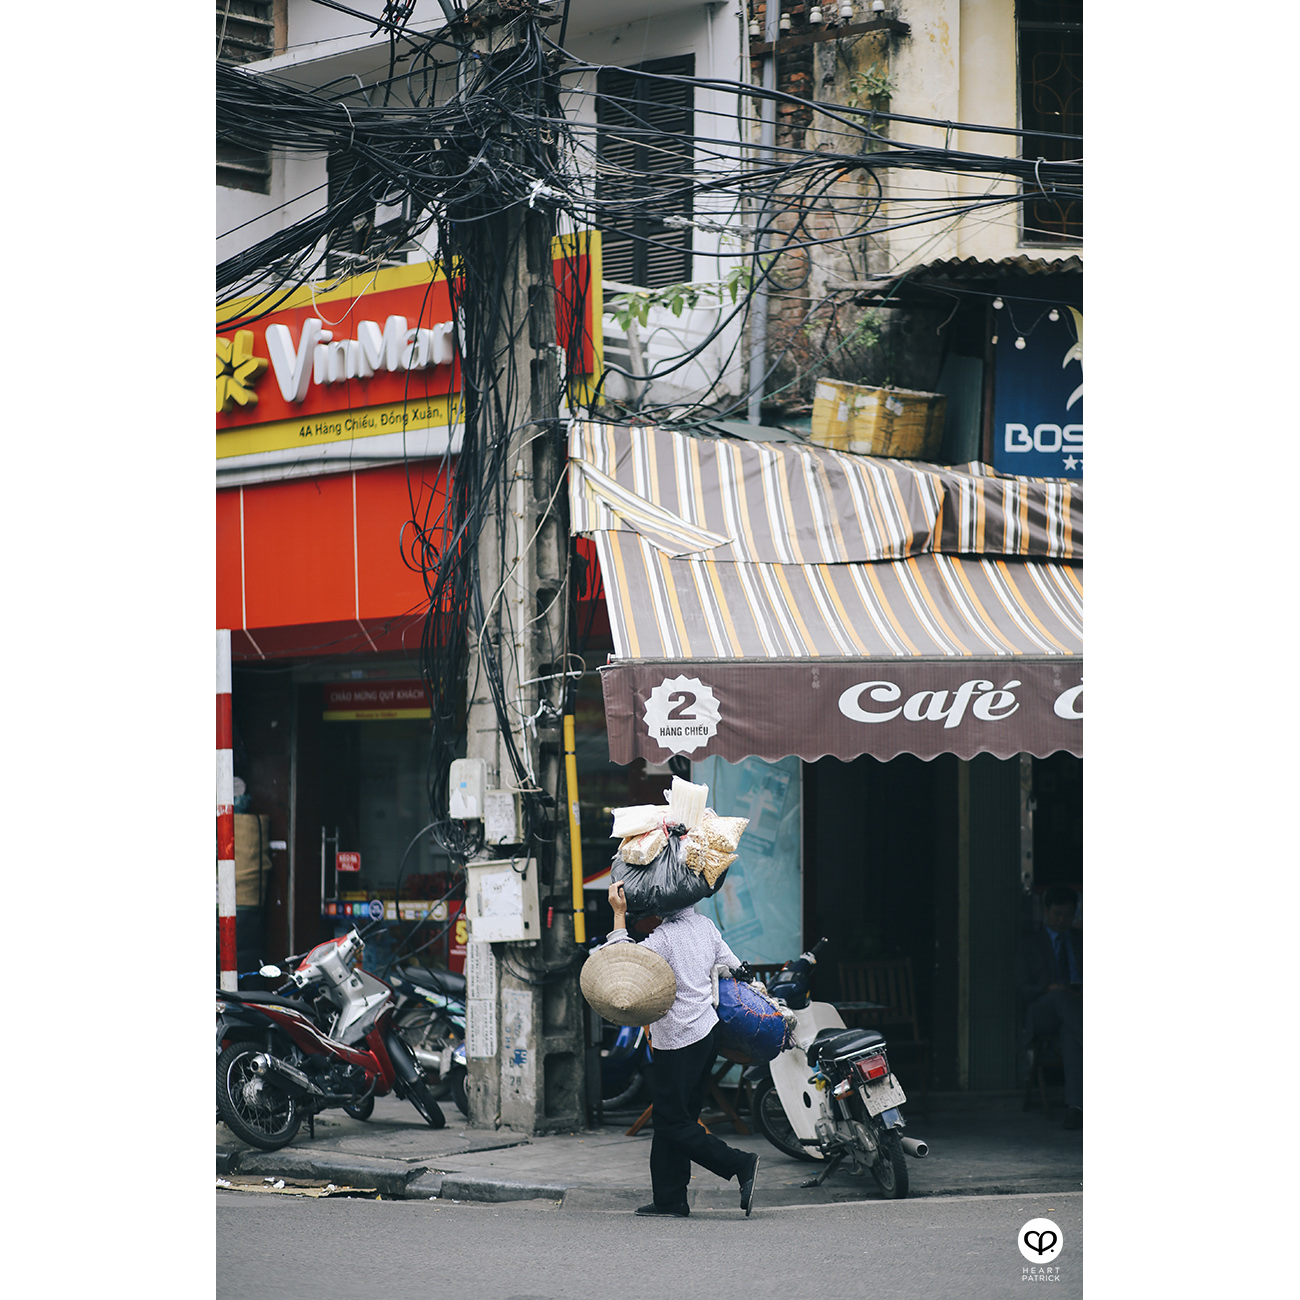 heartpatrick travel hanoi vietnam street photography street vendor